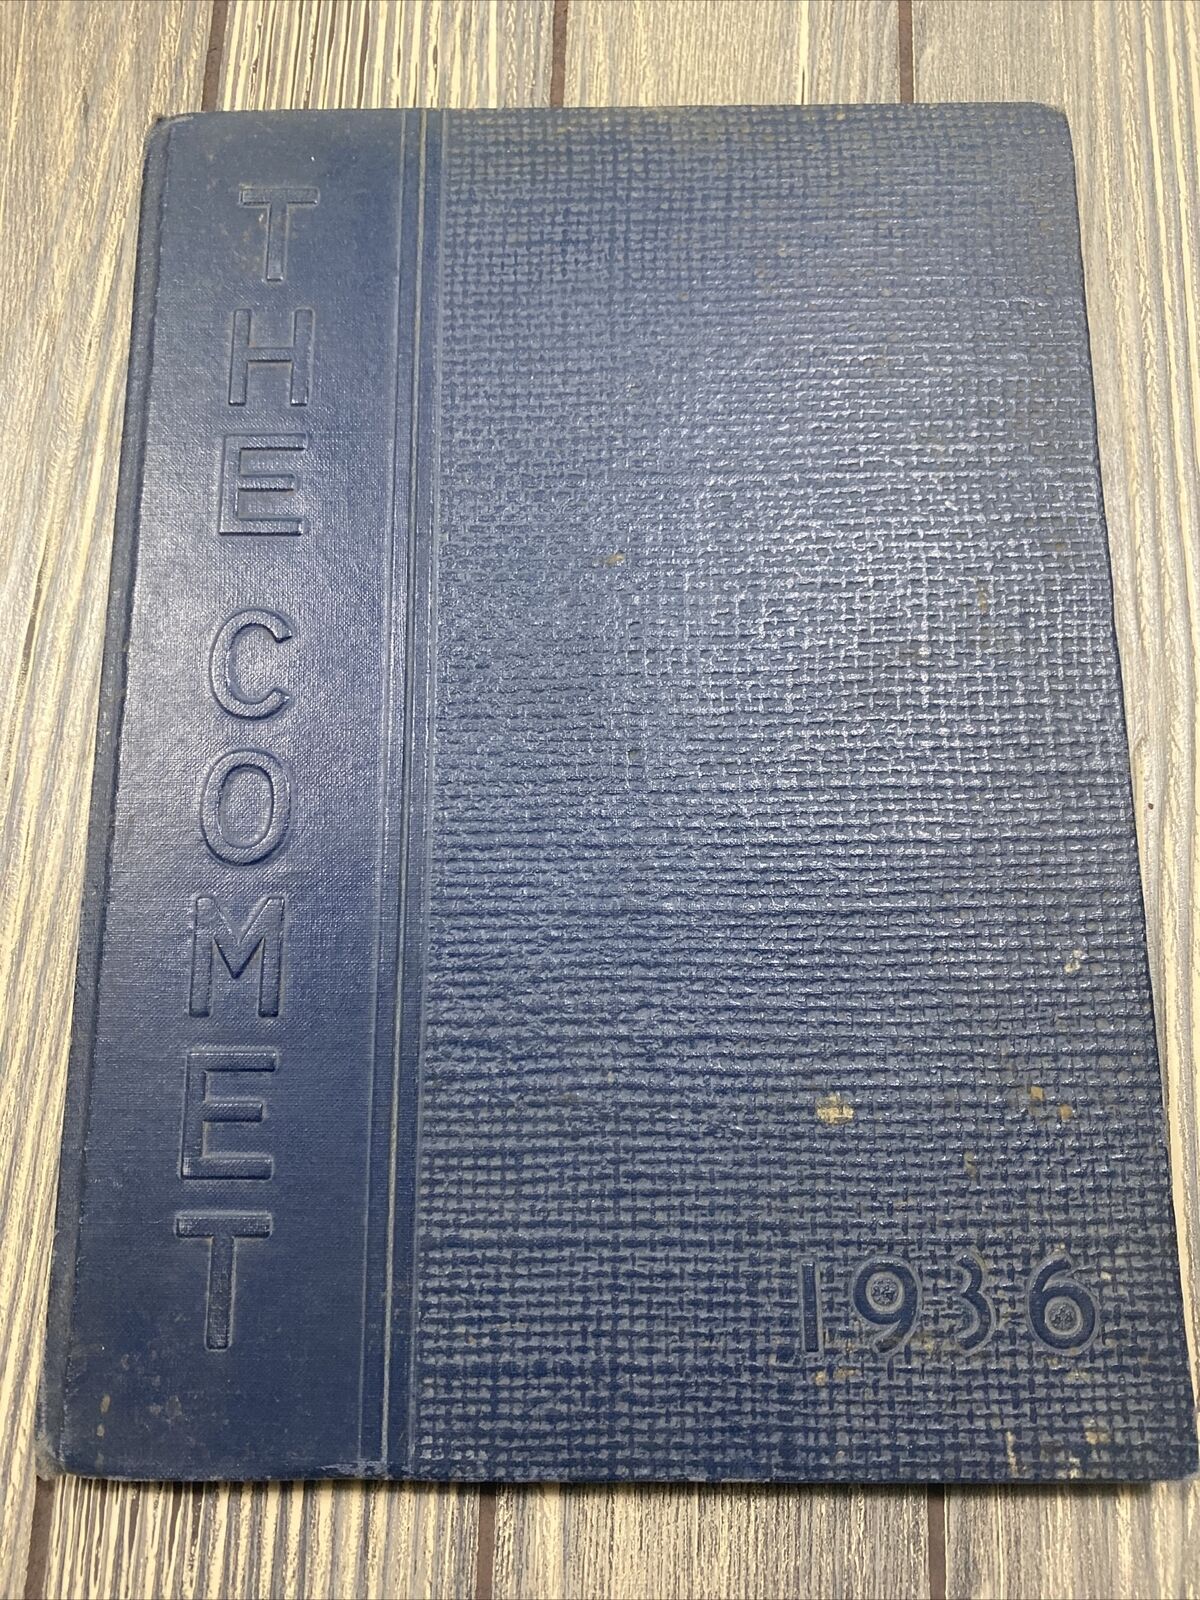 Vintage The Comet High School Year Book 1936 Bellevue Ohio 